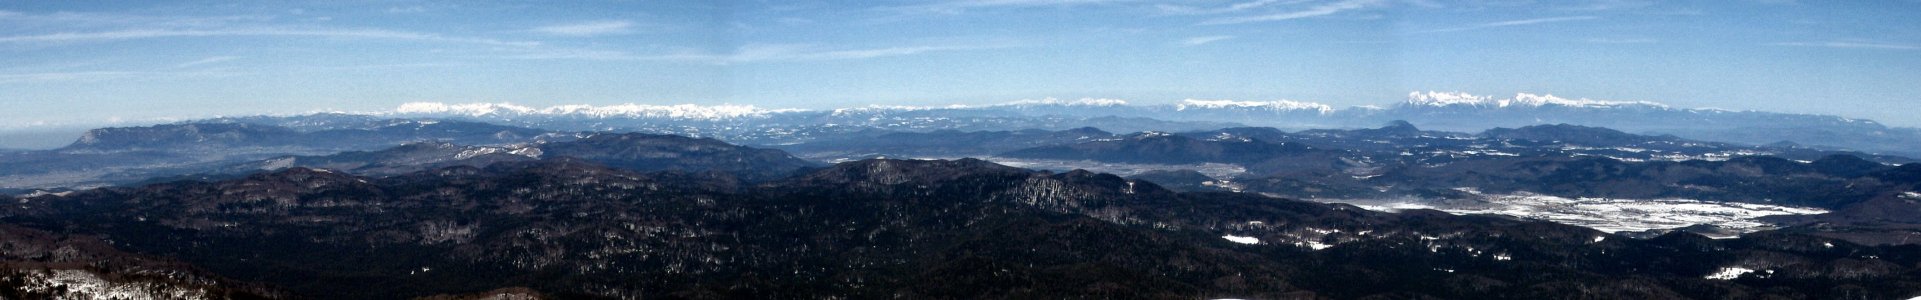 Pogled proti severu, od Nanosa na levi do Kamniških Alp na desni